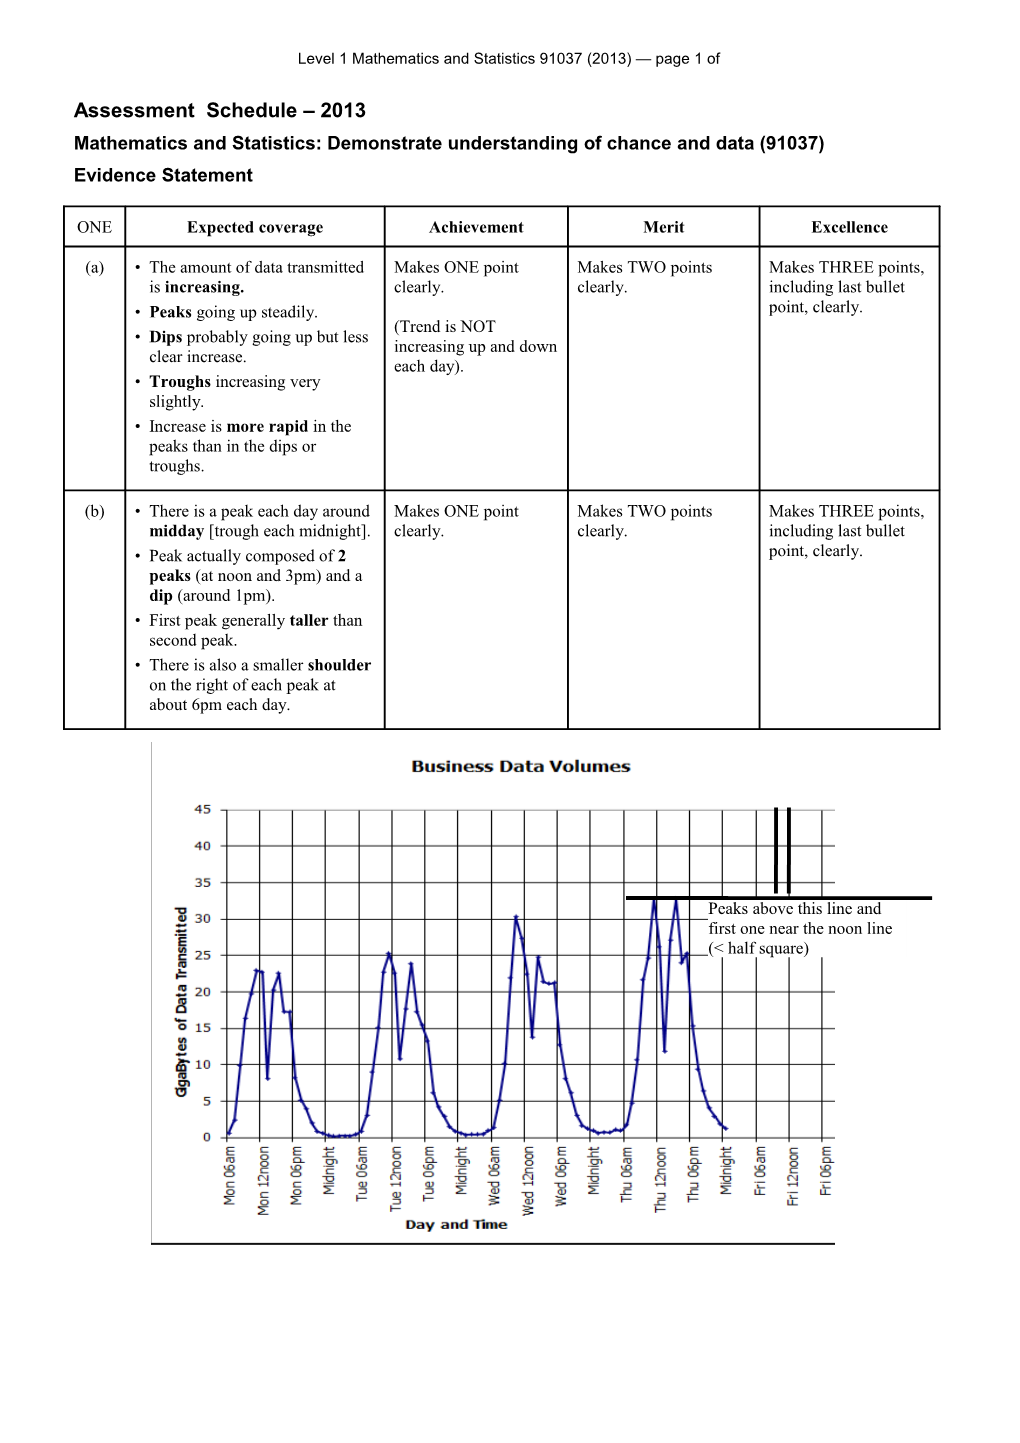 NCEA Level 1 Mathematics and Statistics (91037) 2013 Assessment Schedule